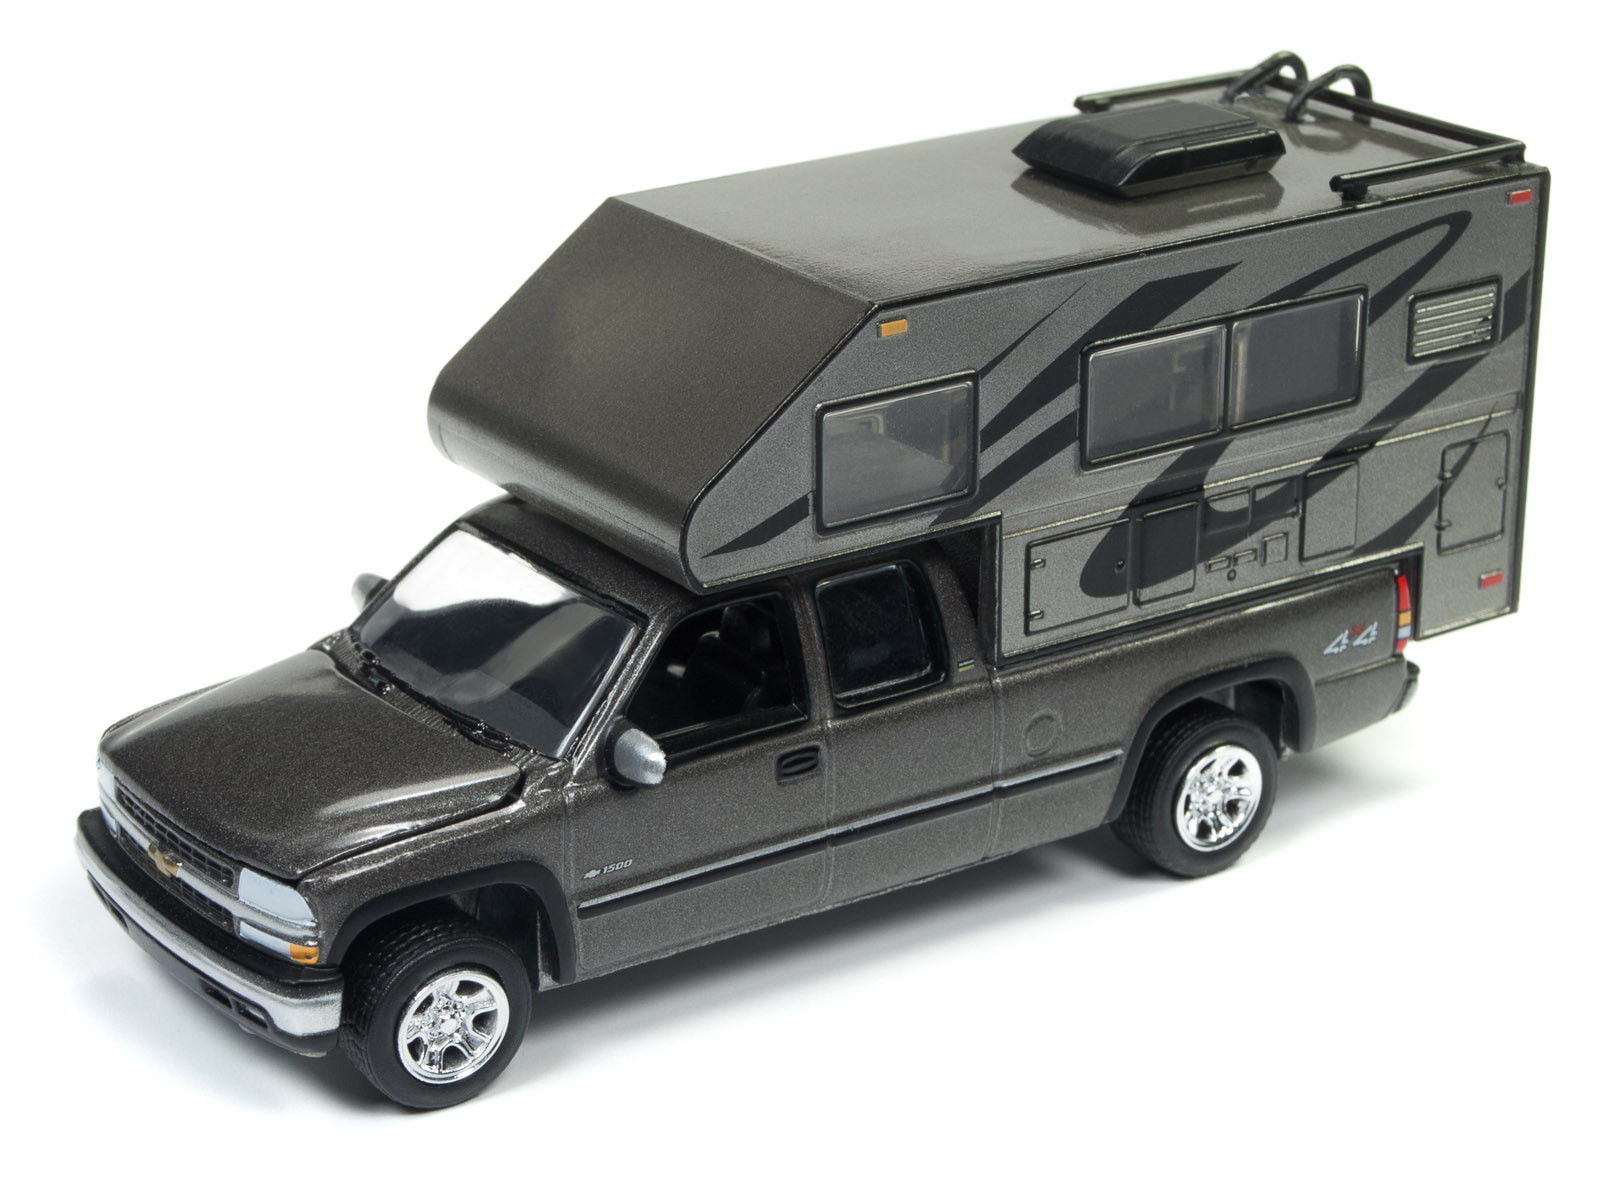 Metallic grey 2002 Chevrolet Silverado w/camper and trailer Johnny Lightning